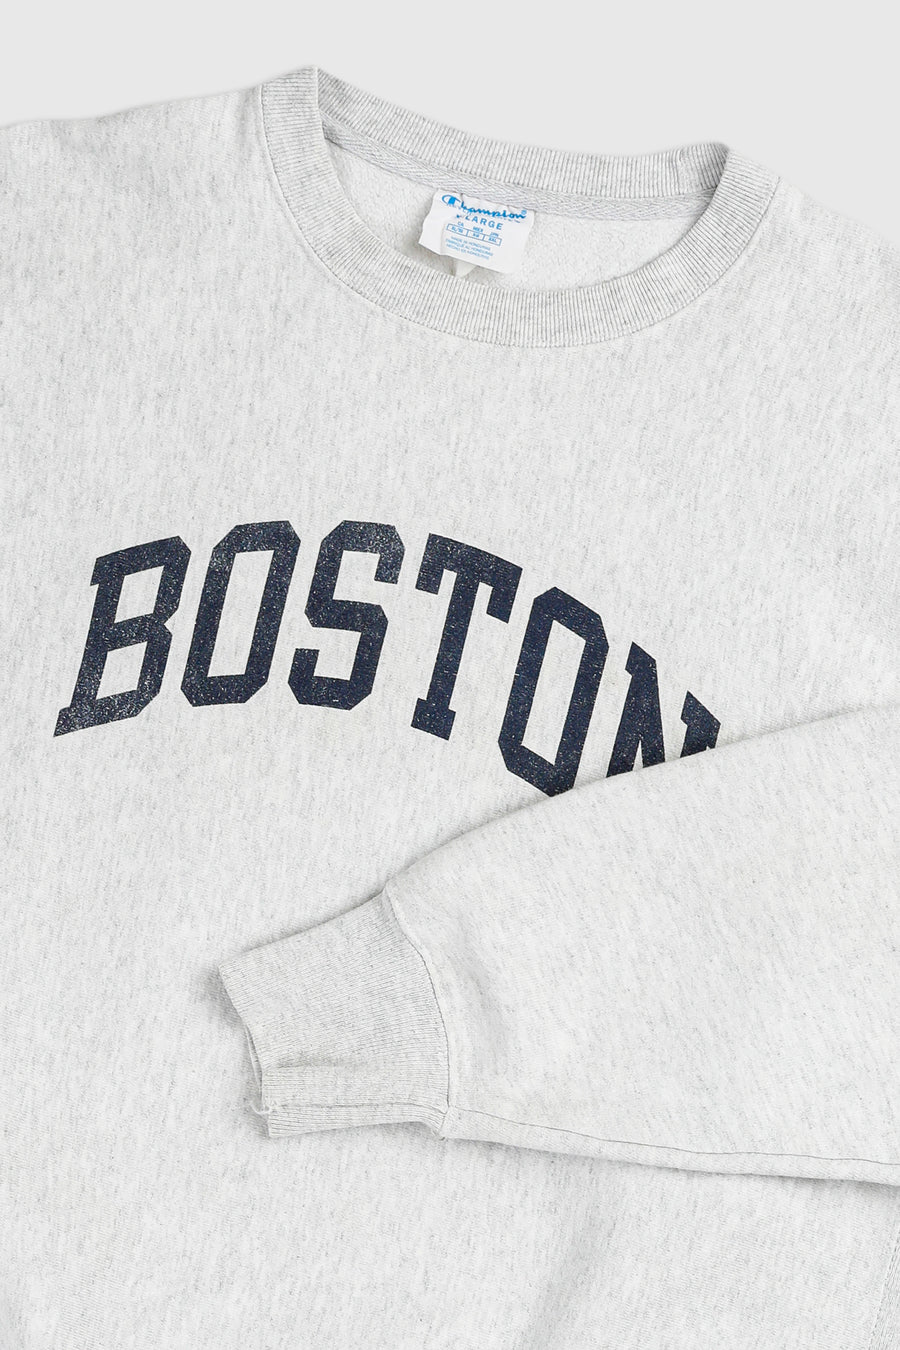 Vintage Boston Sweatshirt - XL